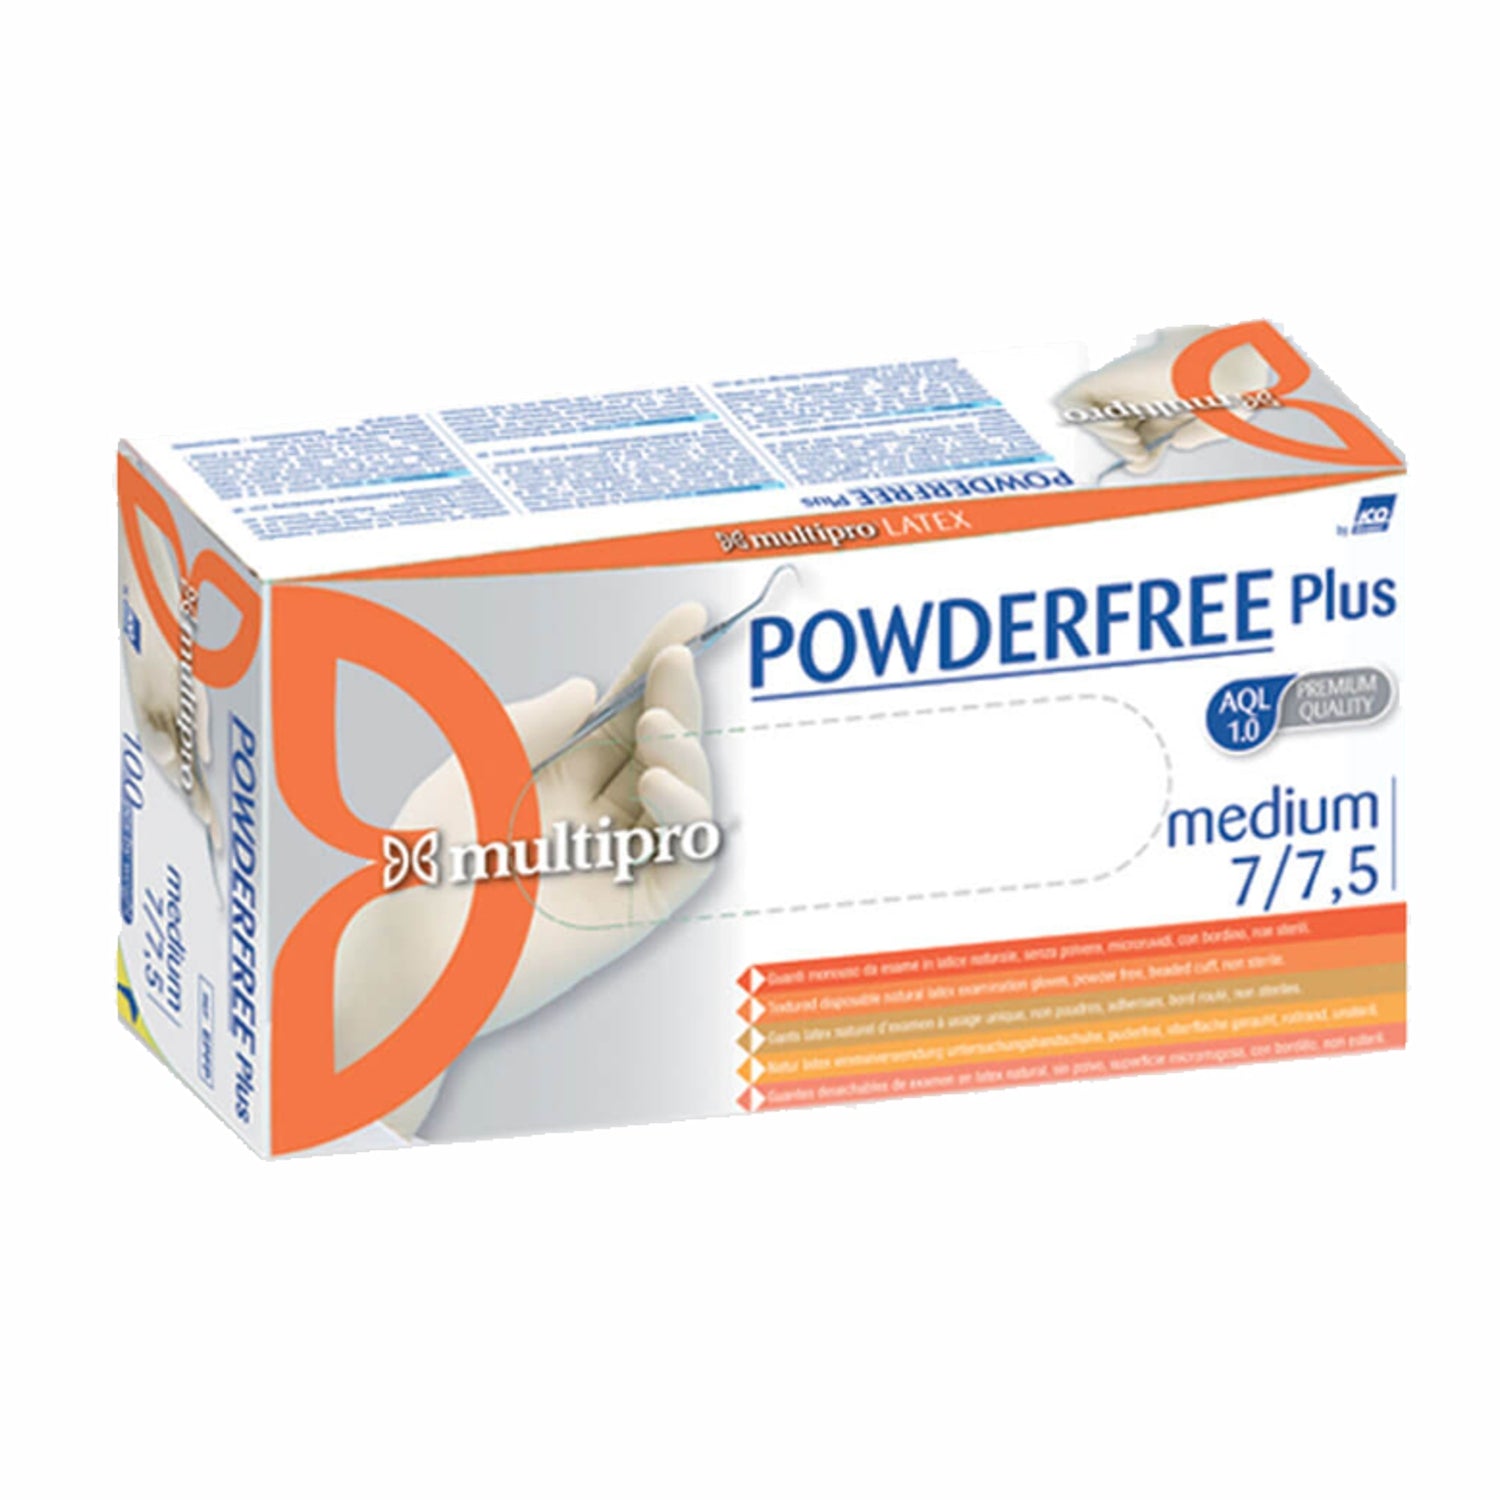 Powderfree Plus Multipro guanti monouso in lattice Icoguanti